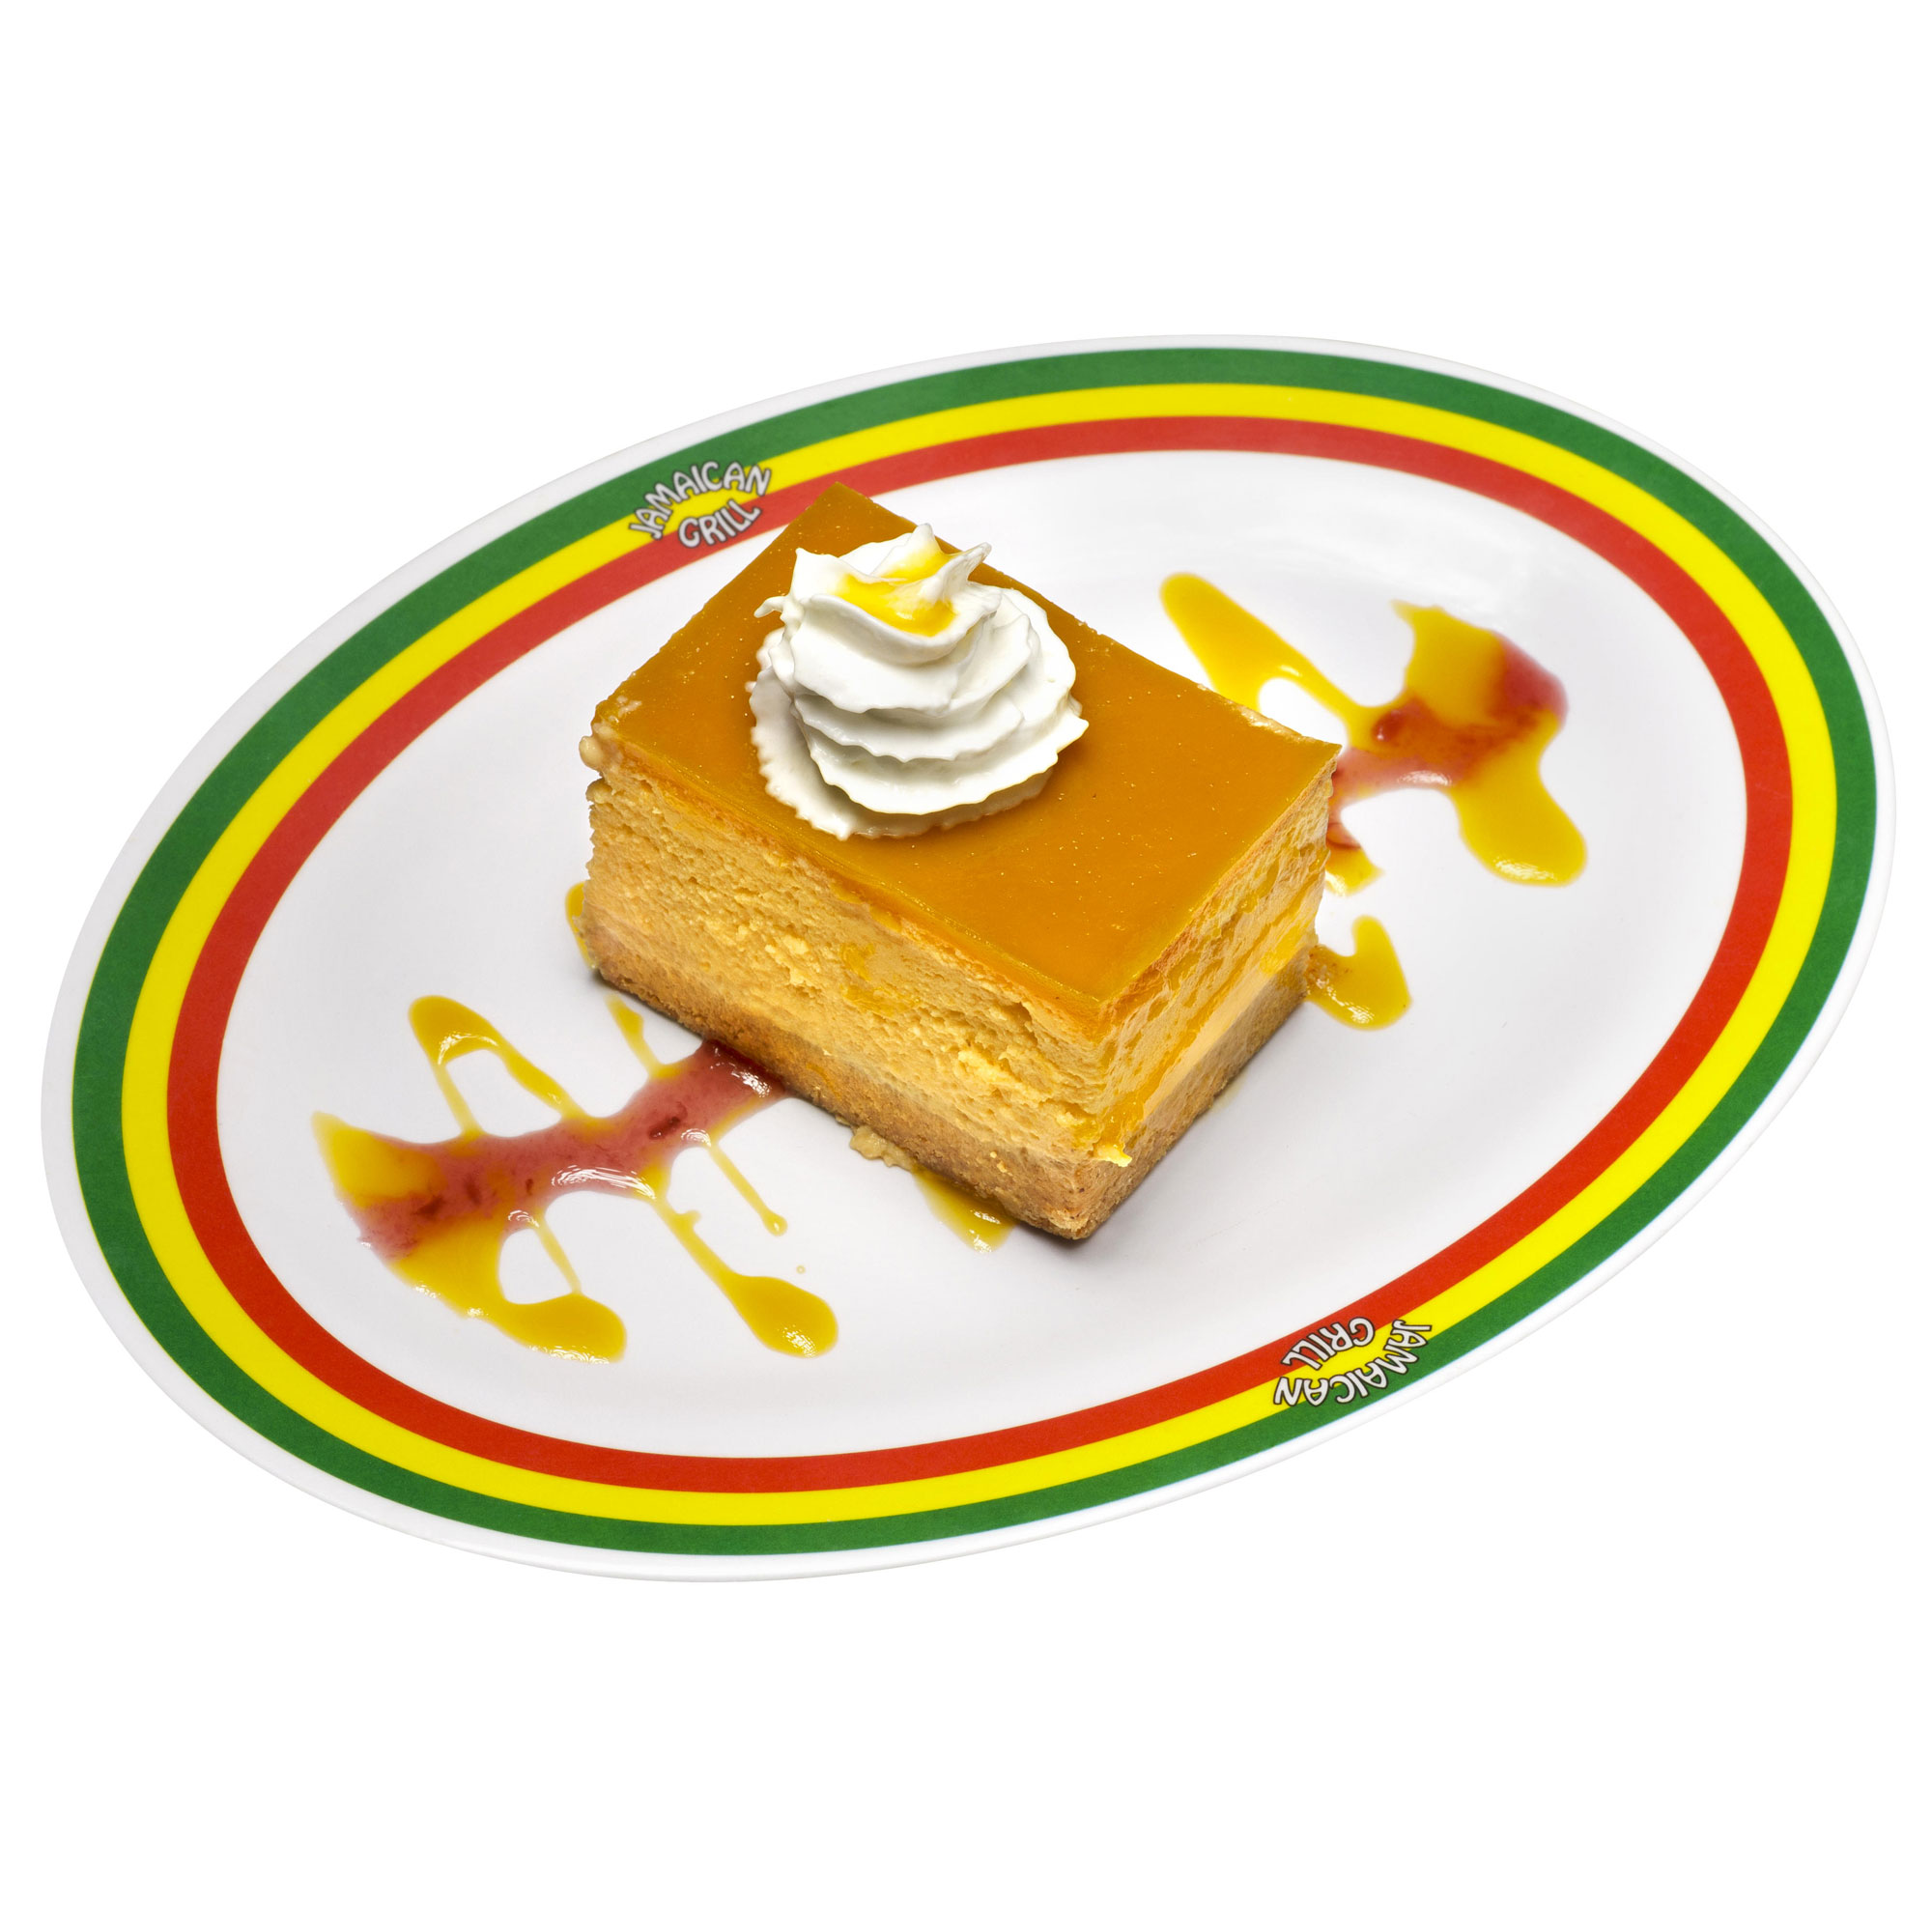 Ja-Mango Cheesecake<span class="Apple-tab-span" style="white-space:pre"> </span>